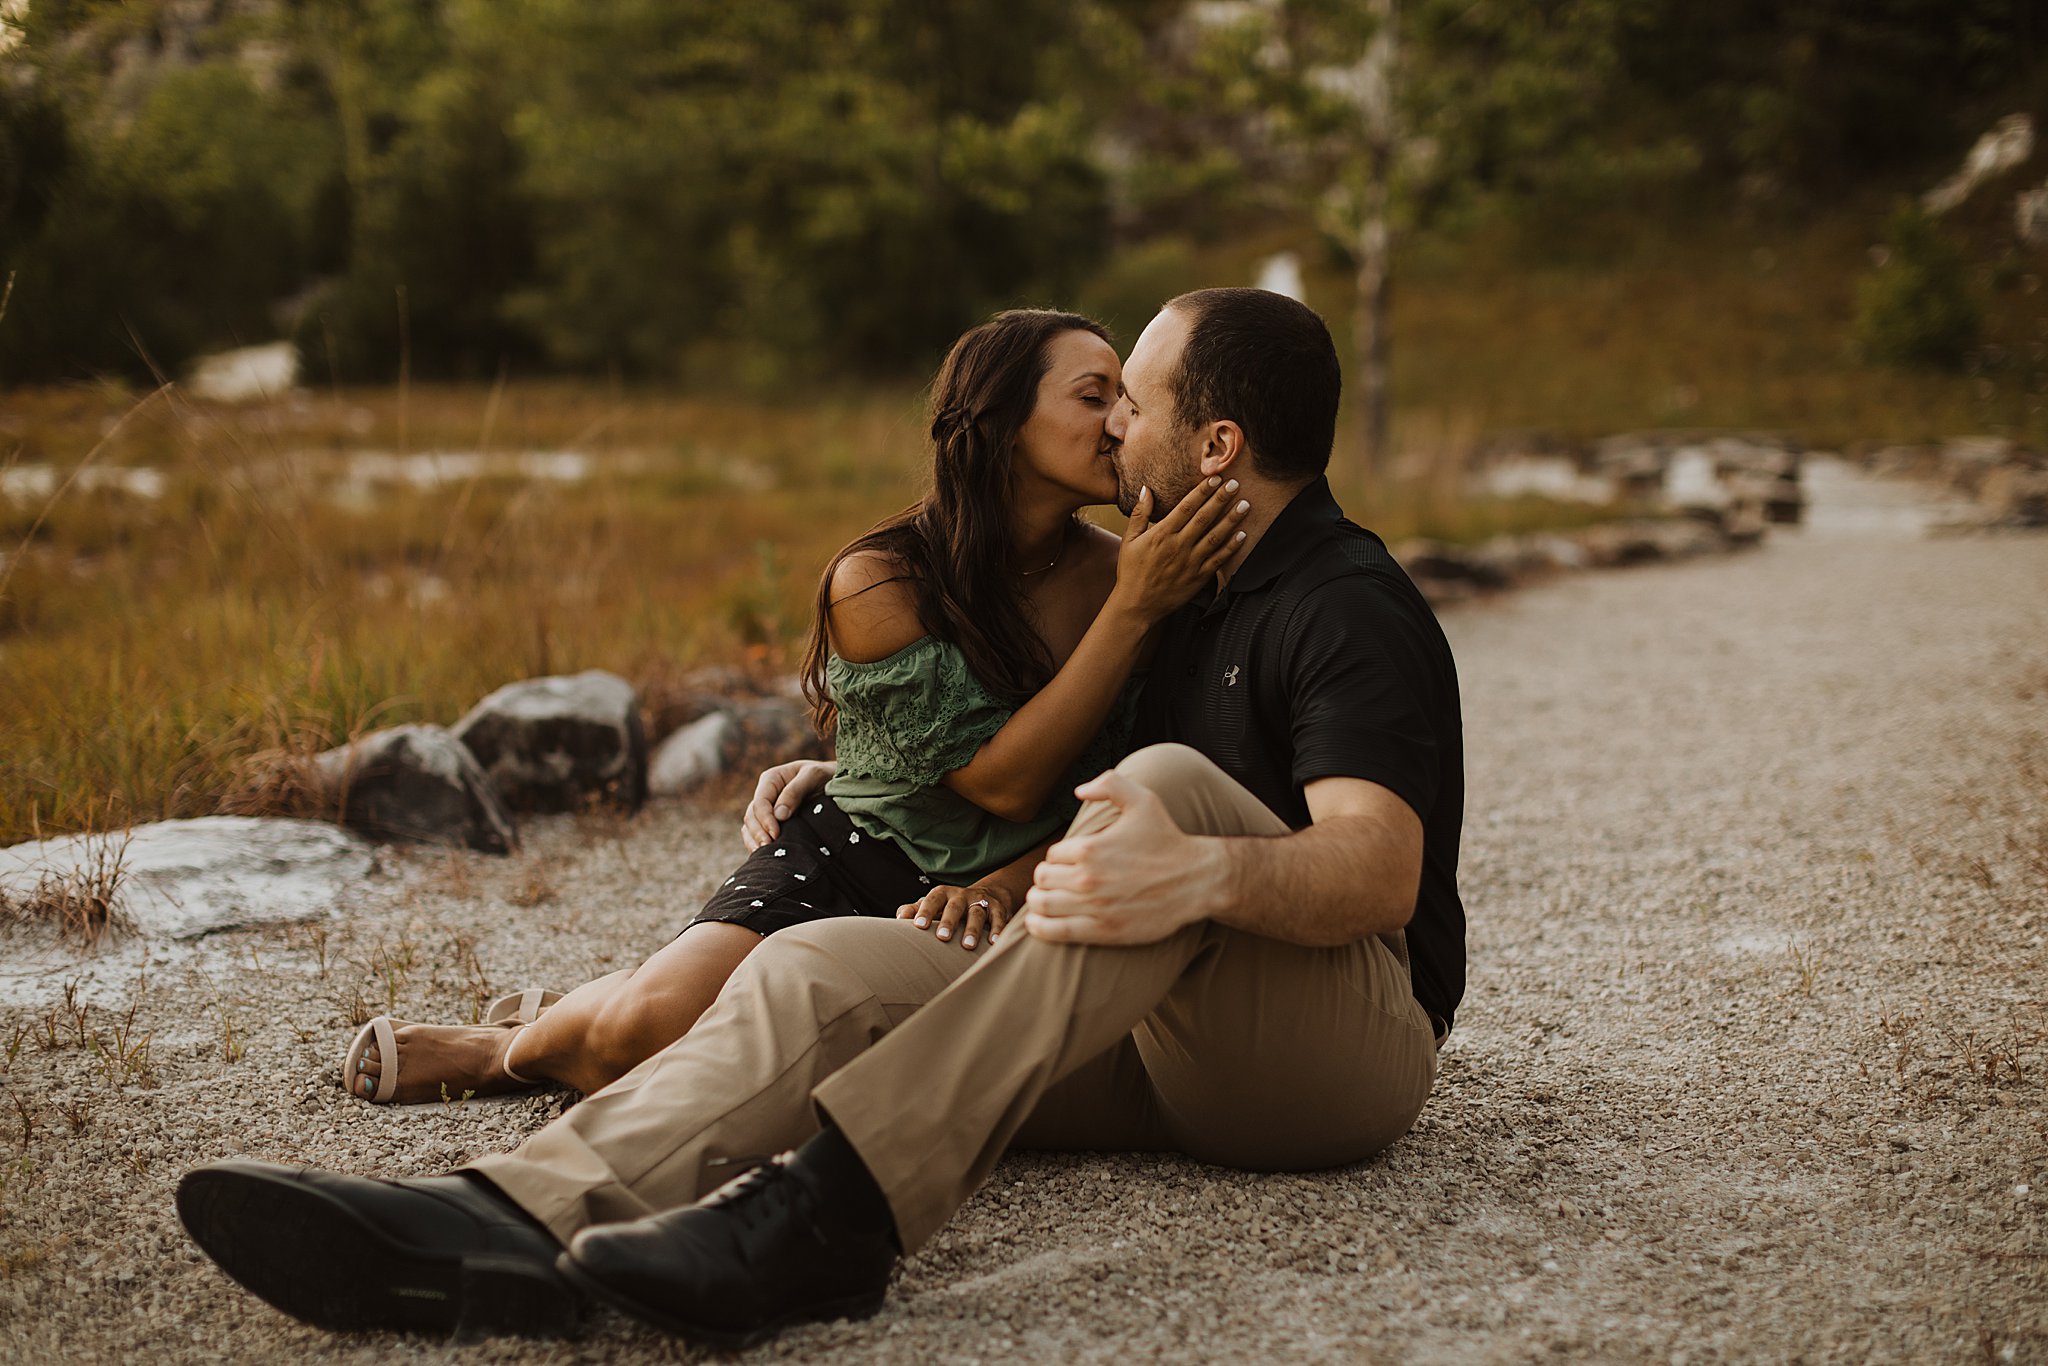 Engagement Photos at Klondike Park